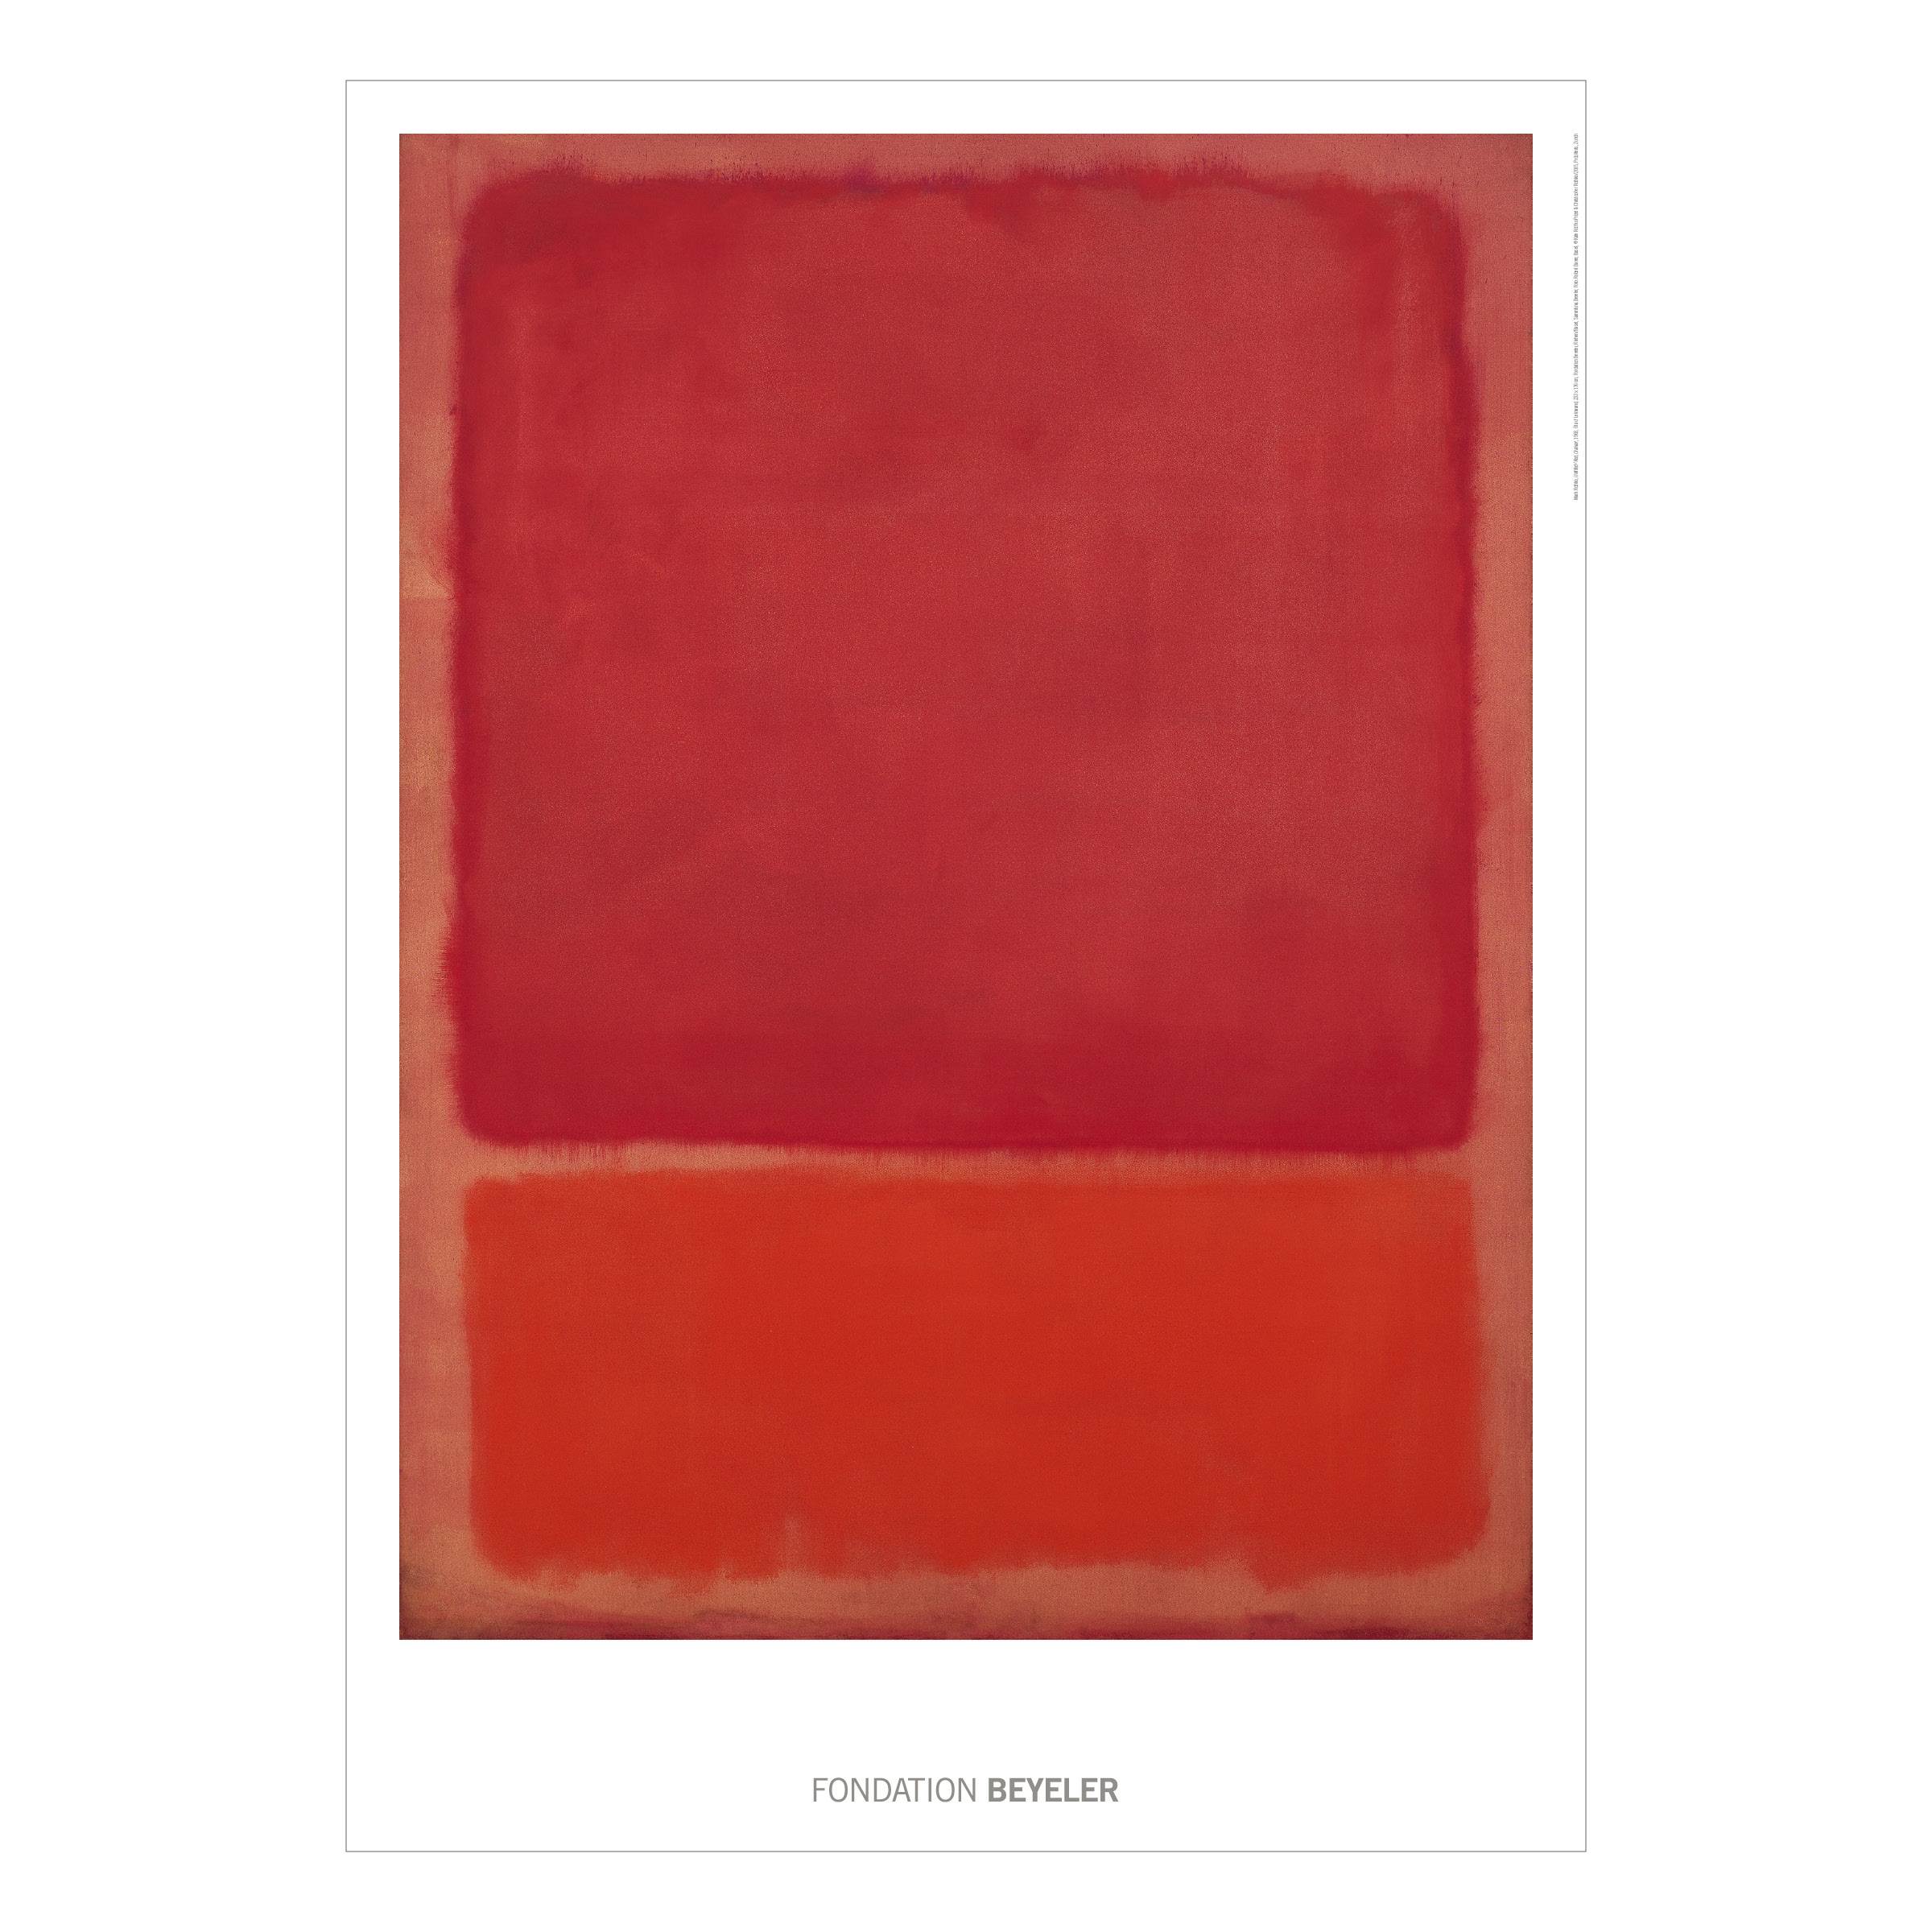 Règle PP Rothko 15 cm - Capkdo Objet publicitaire